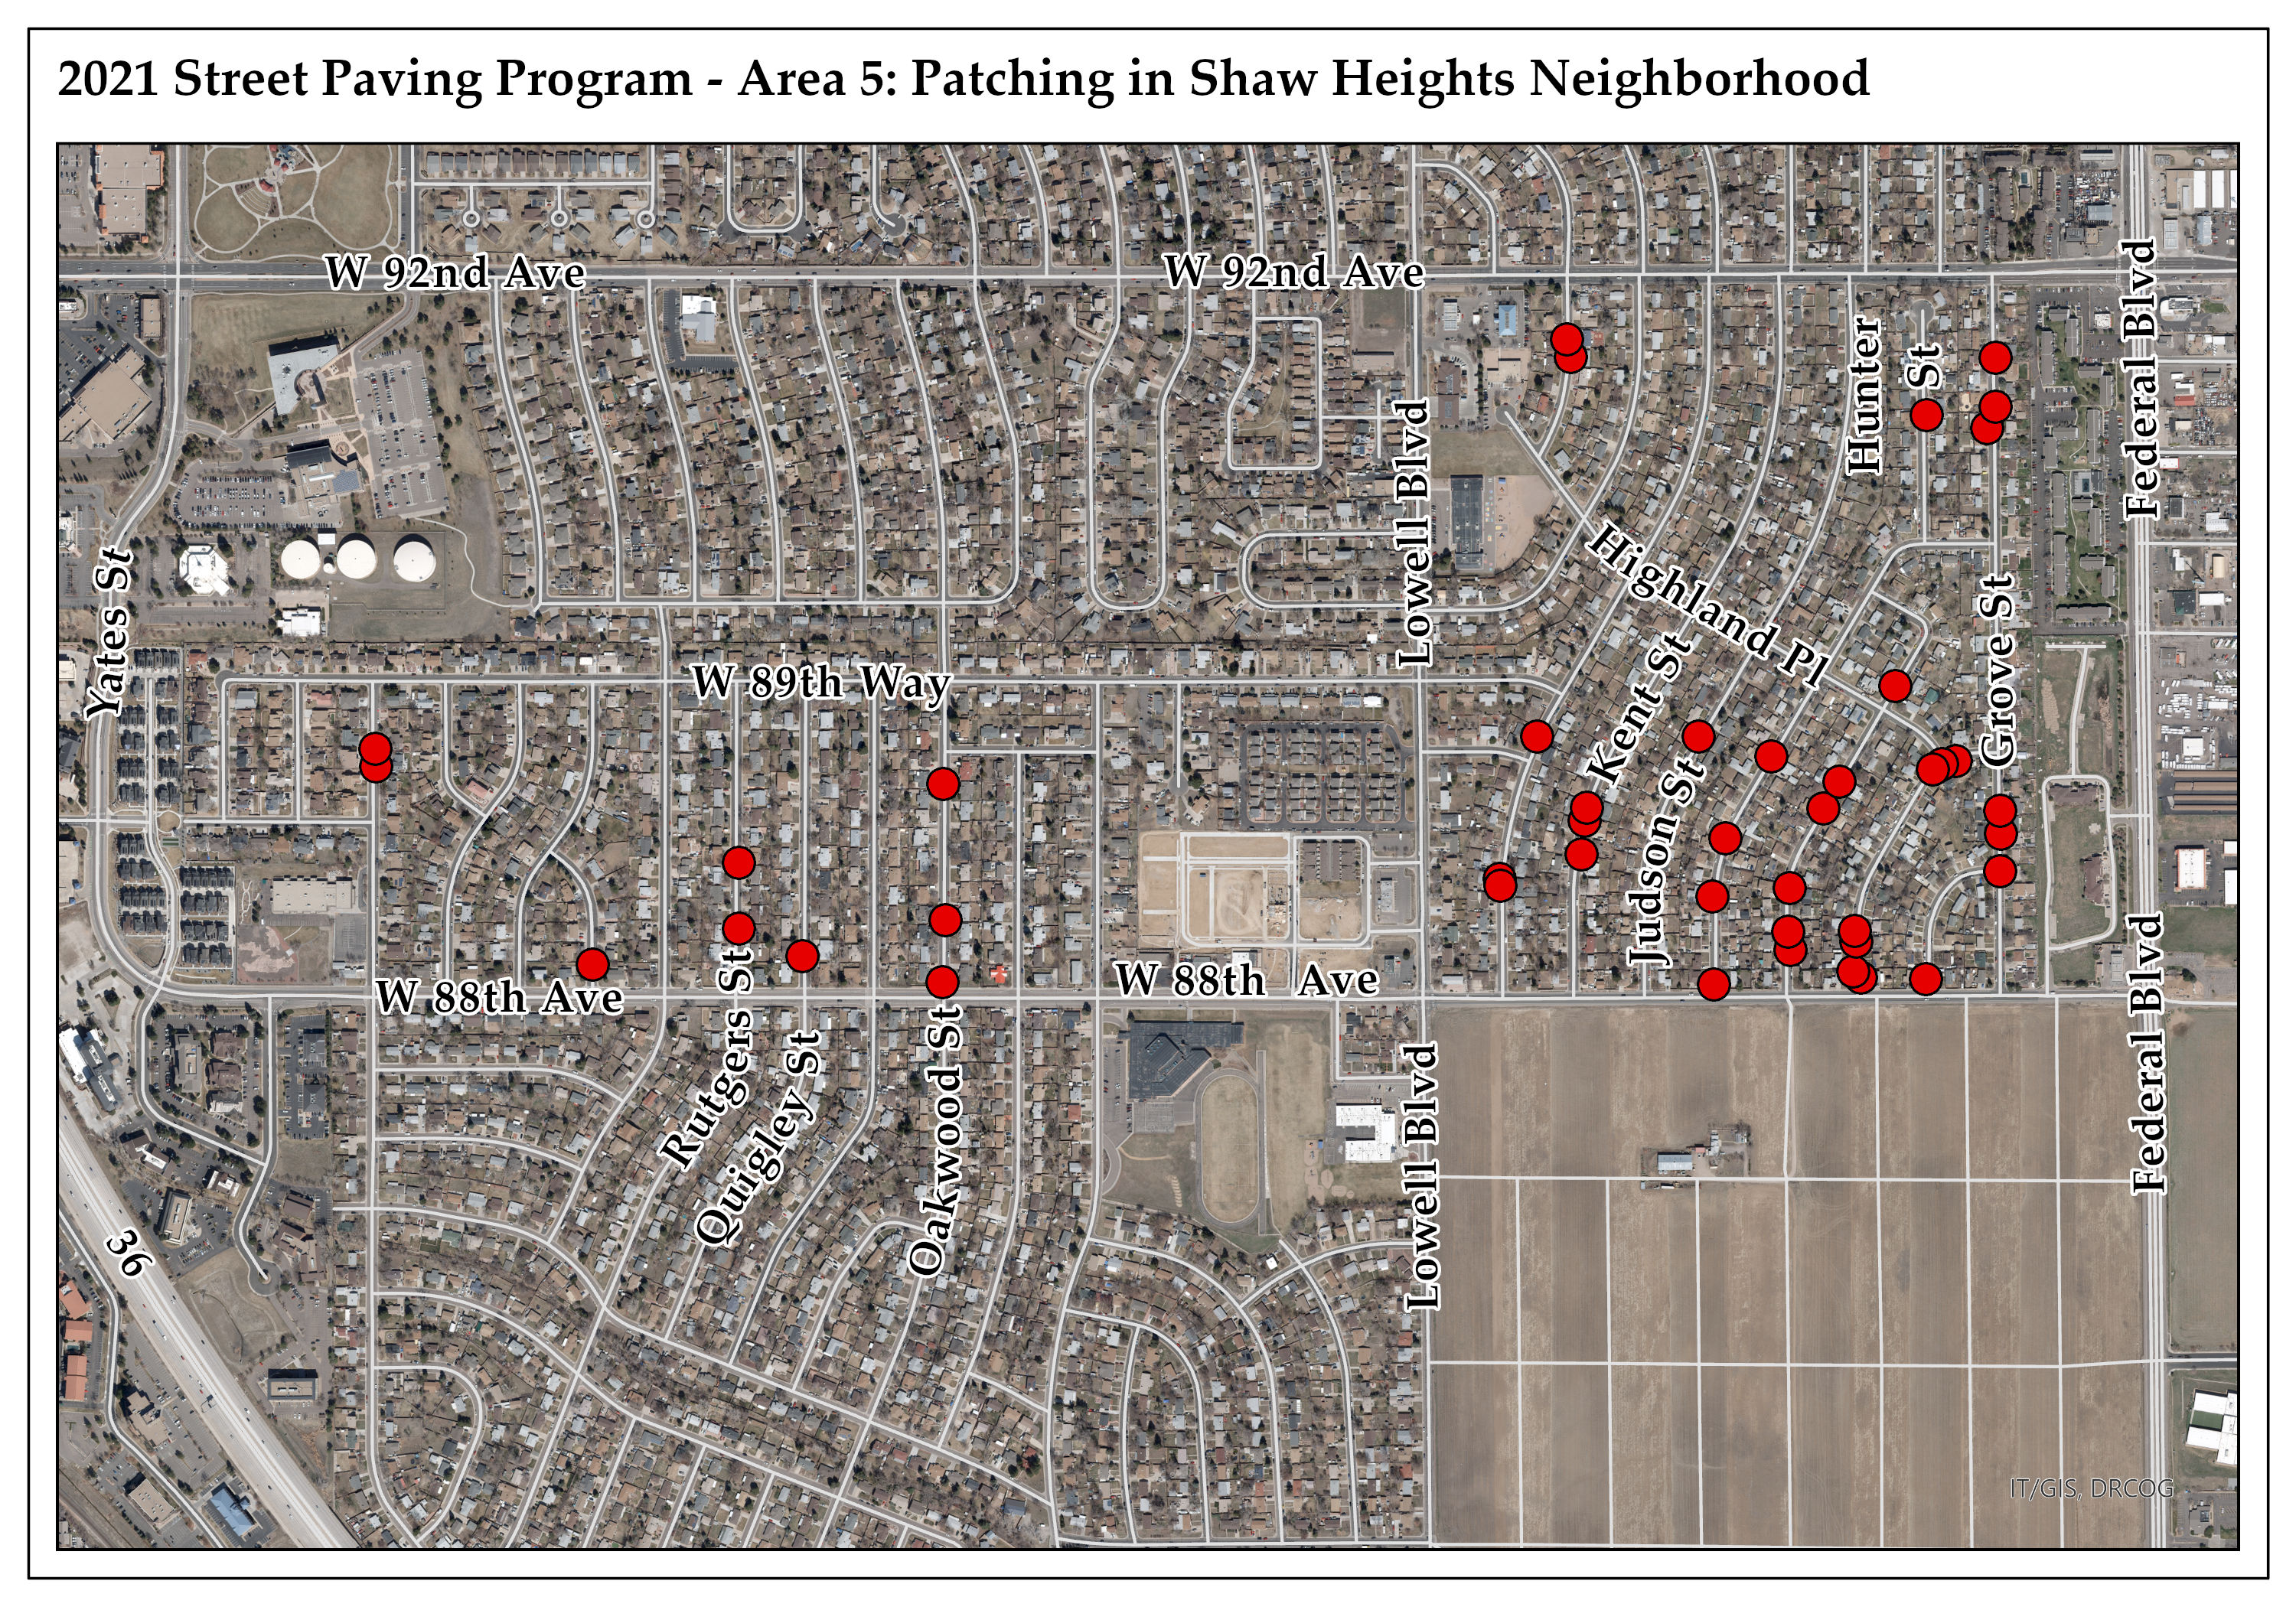 Area 5 – Patching in Shaw Heights neighborhood